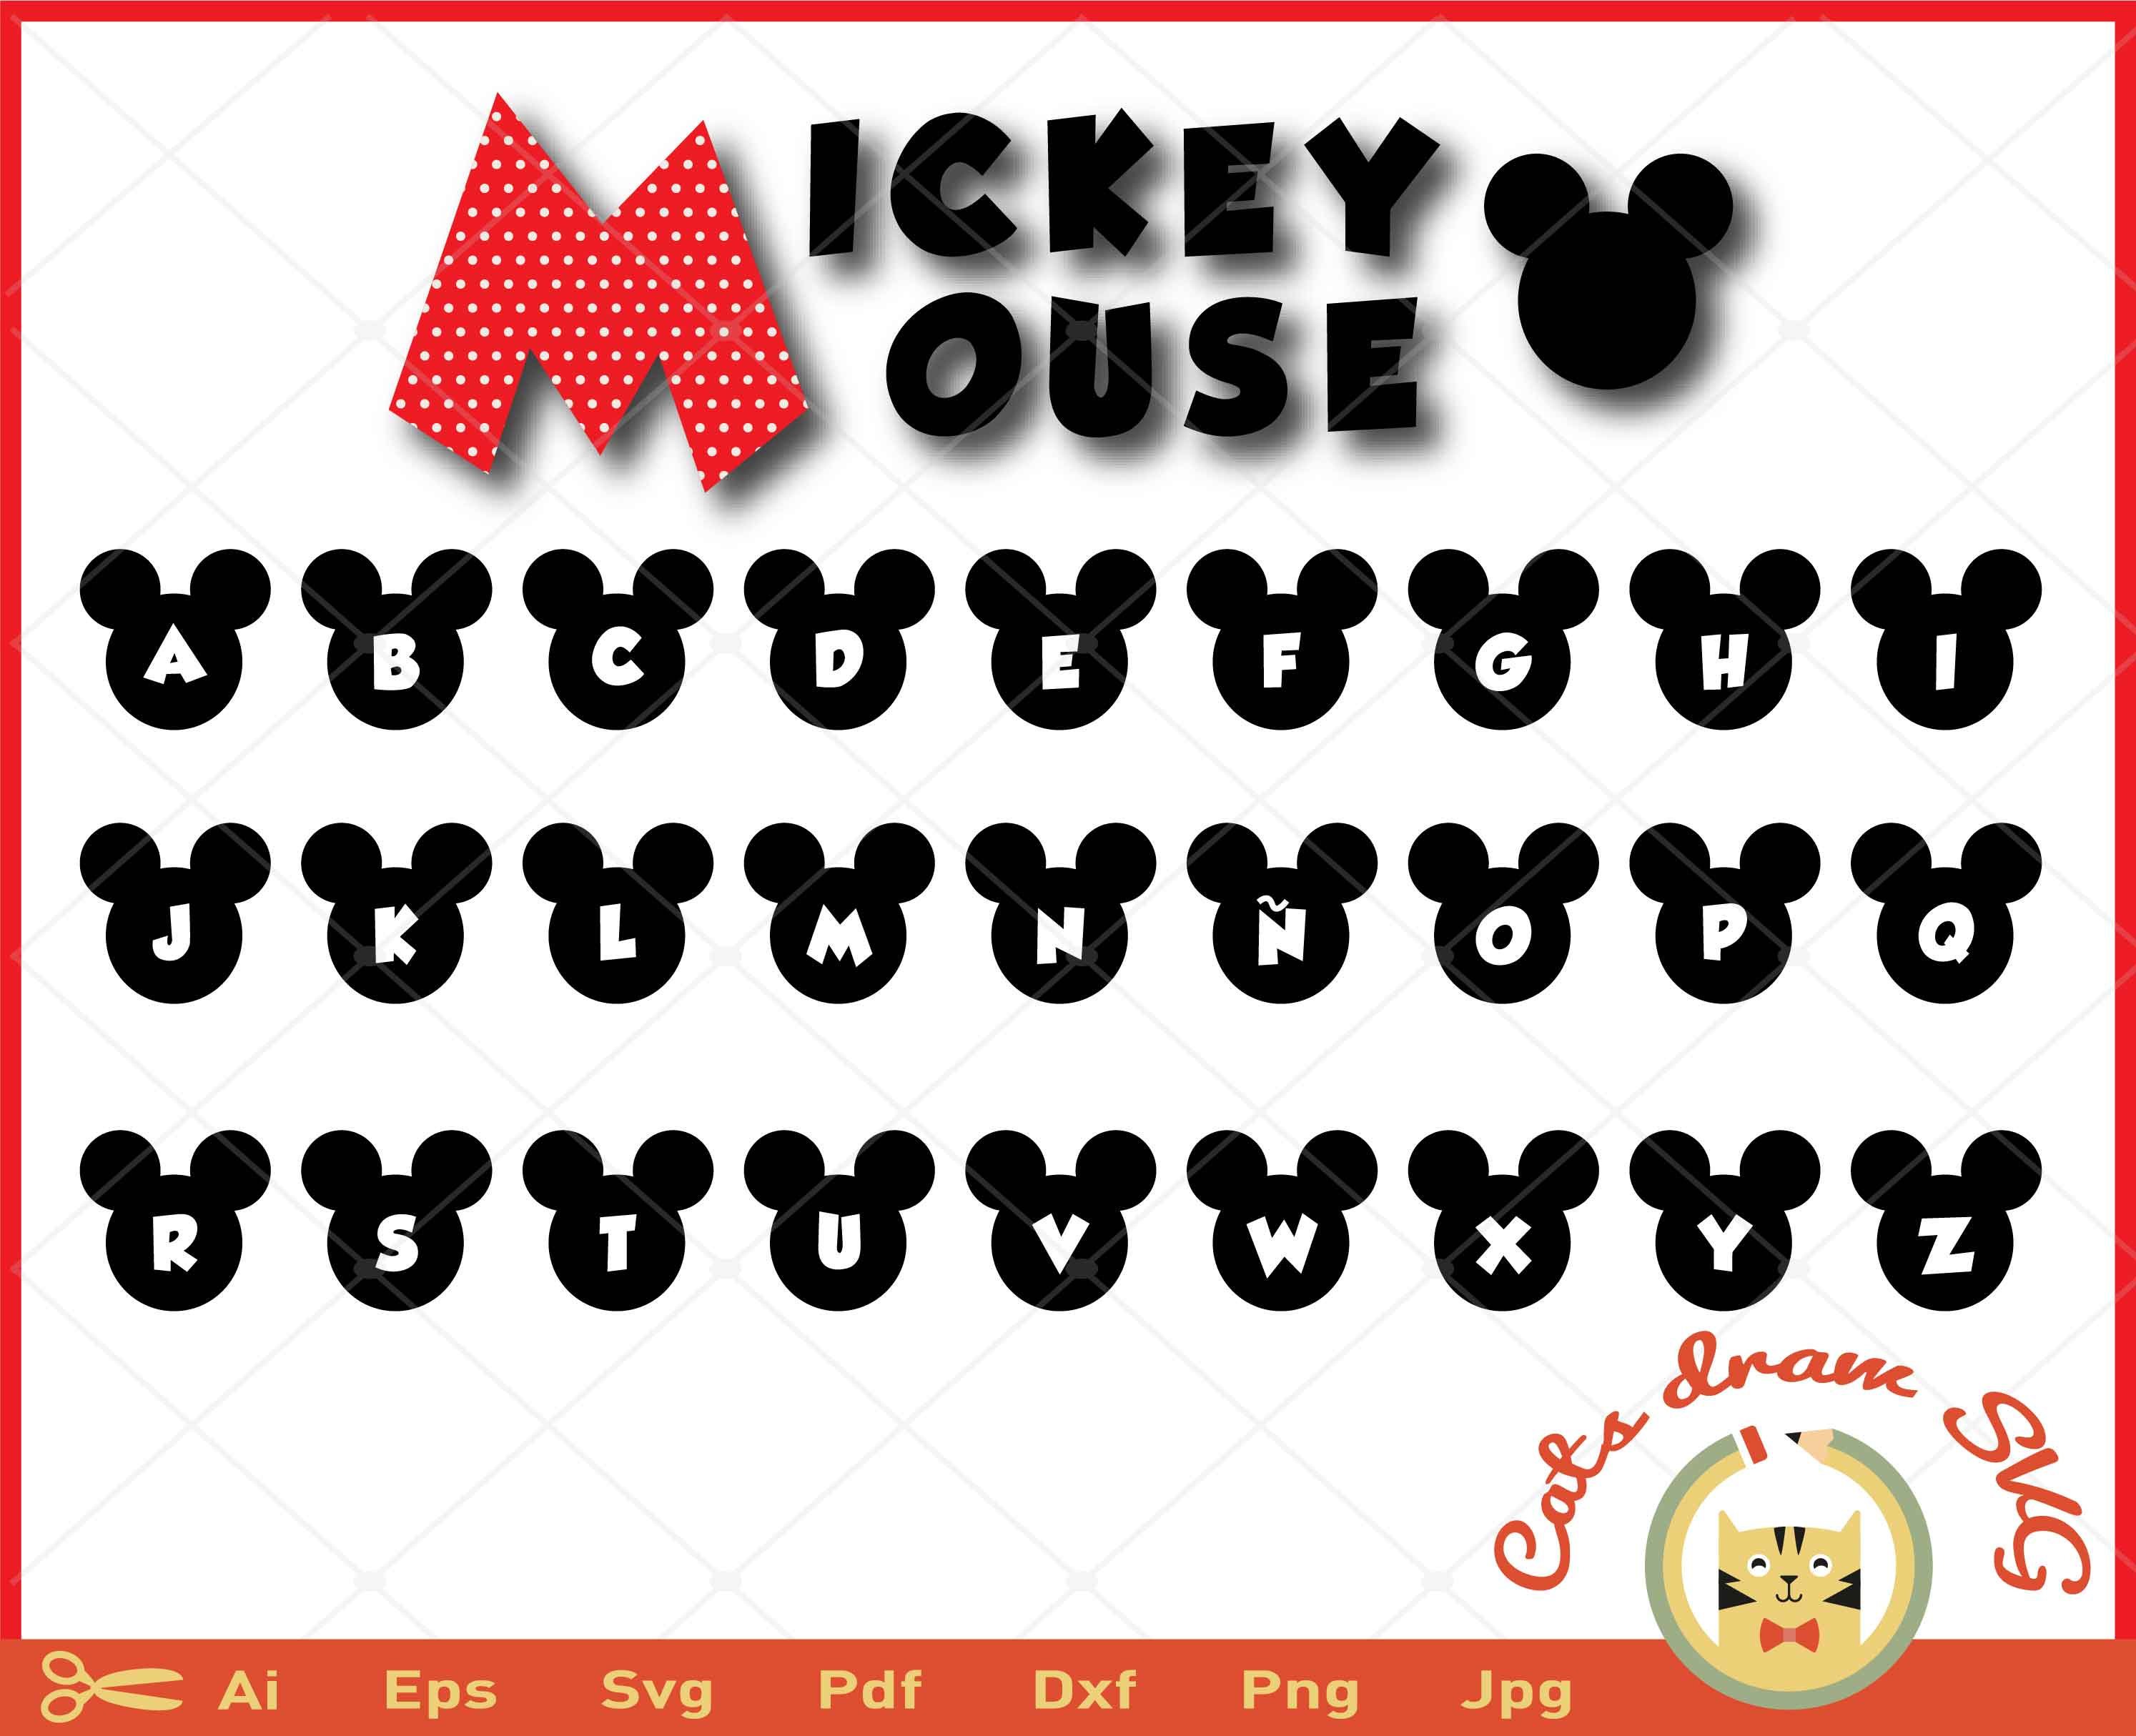 Letras de Mickey Mouse para imprimir gratis moldes de letras (4)